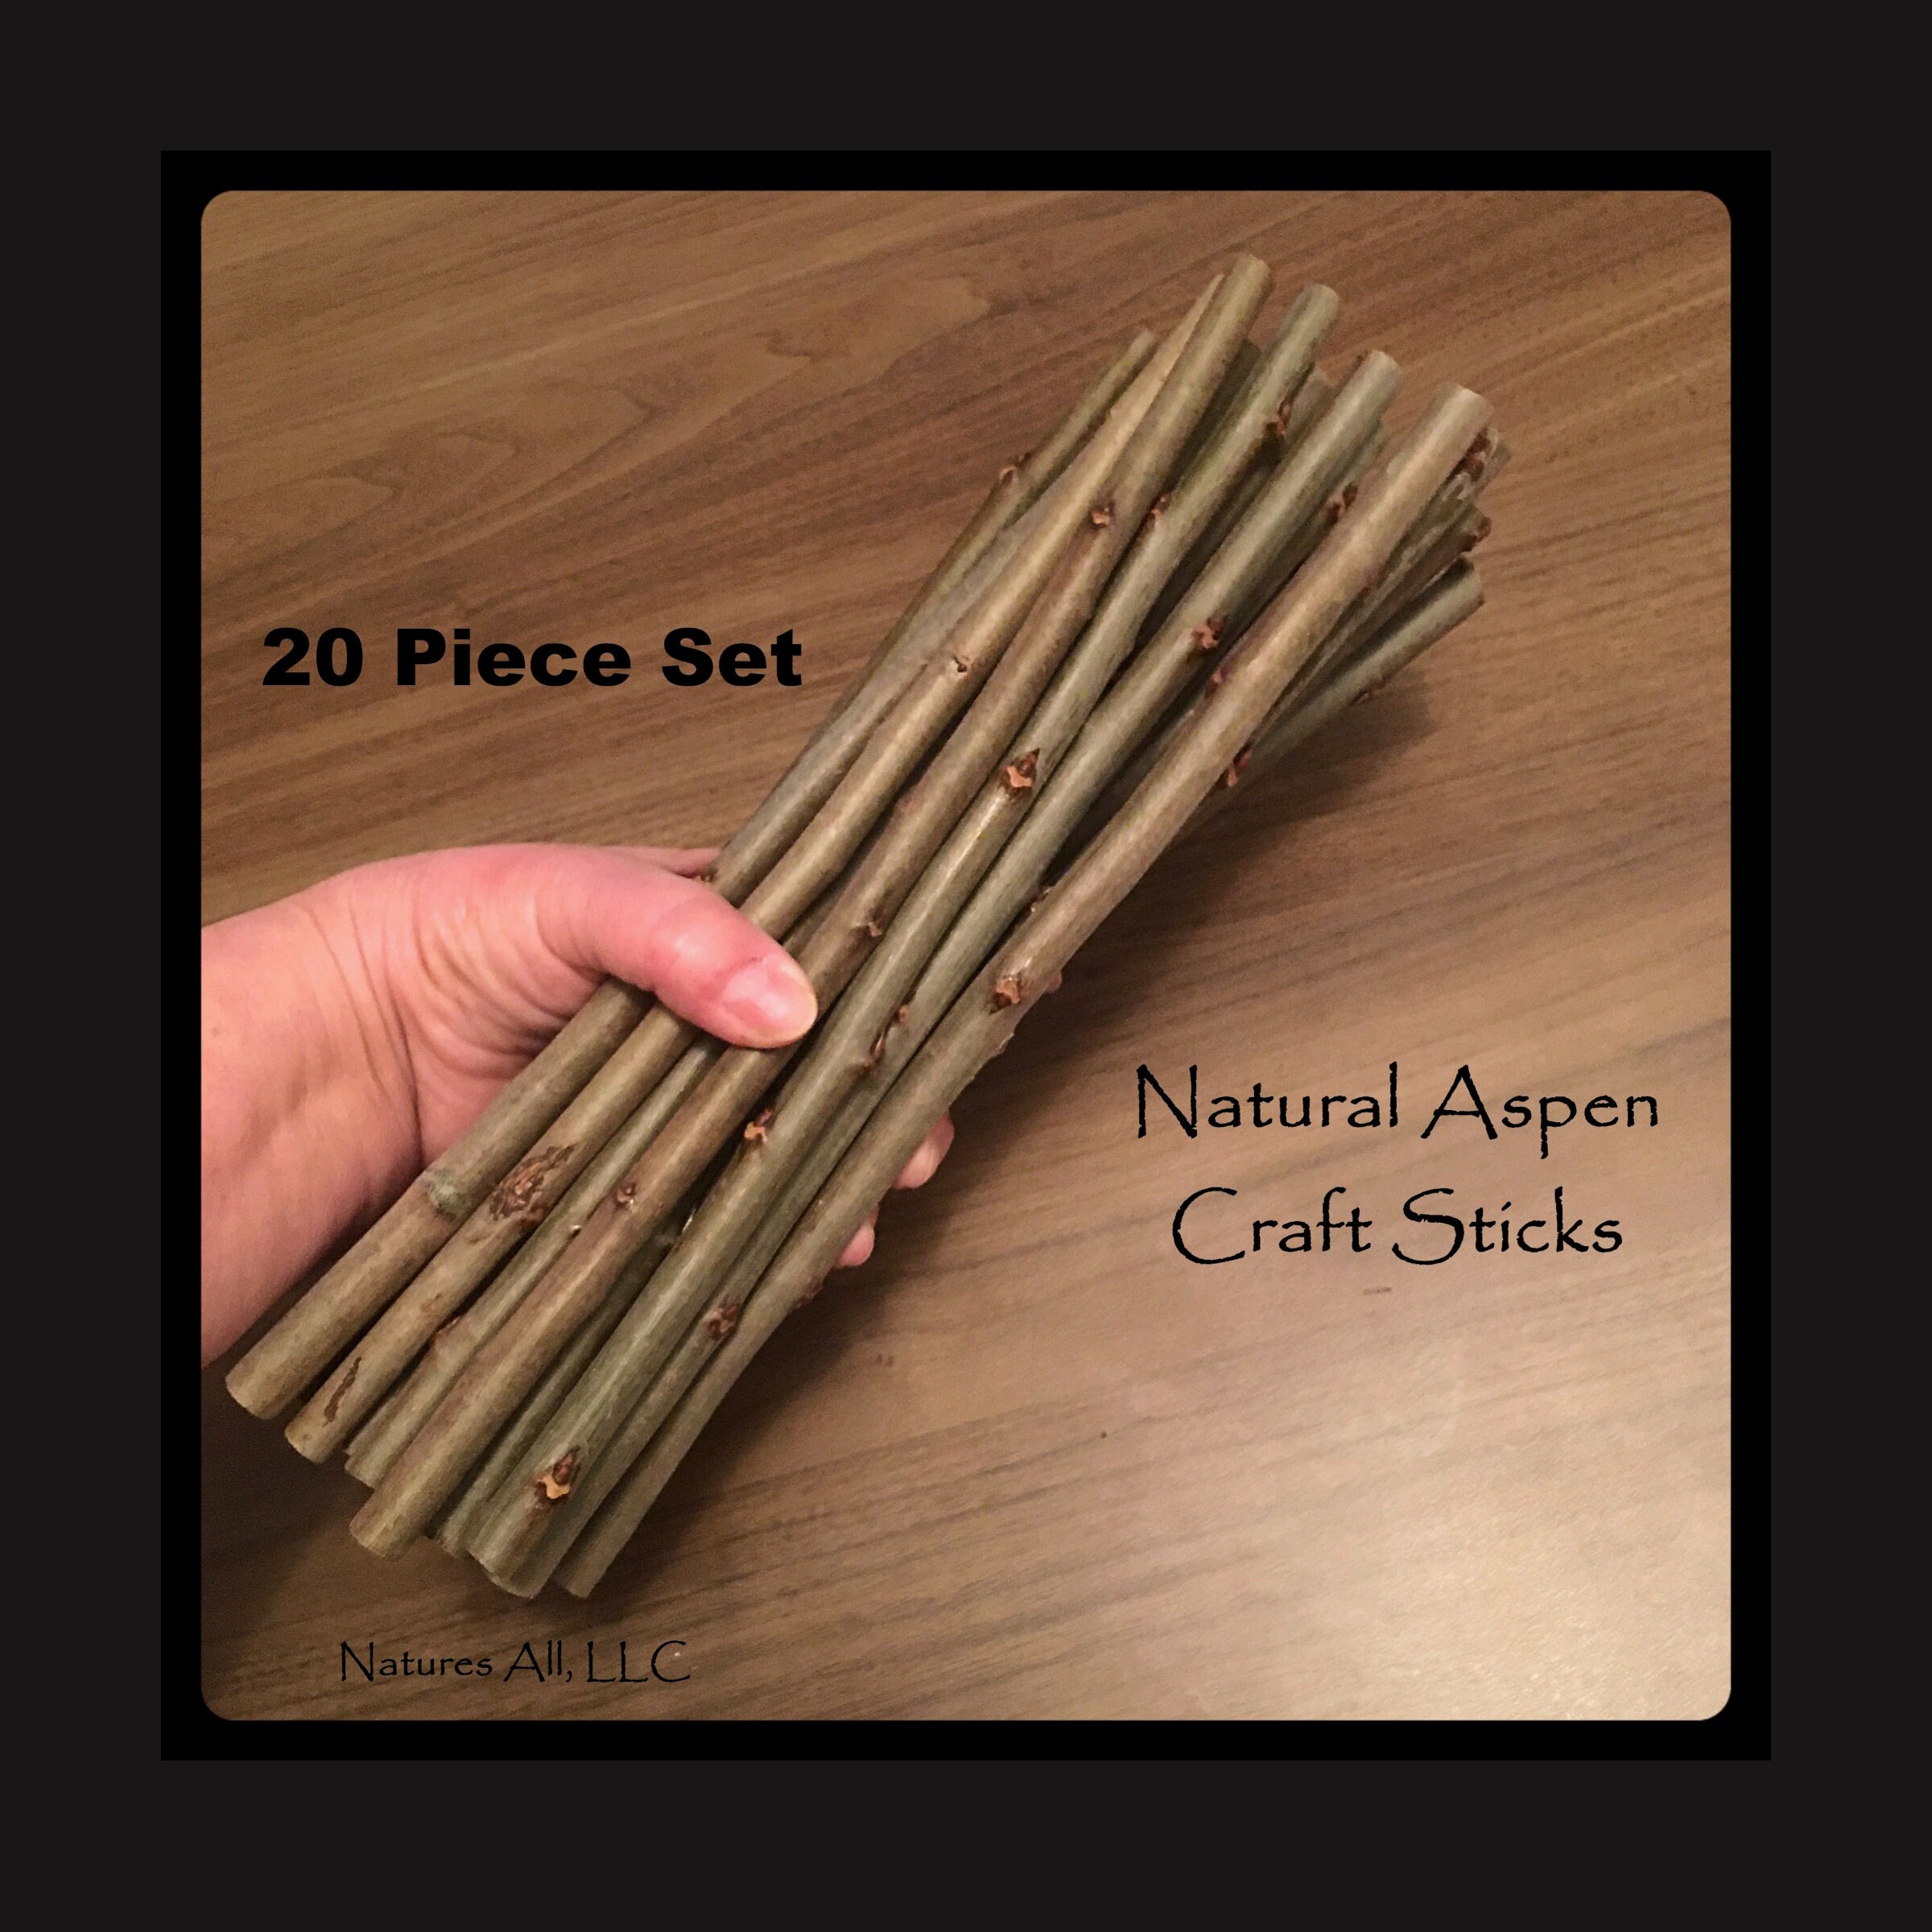 Eco Craft Stix Jumbo Craft Sticks. Case of 5000 ct